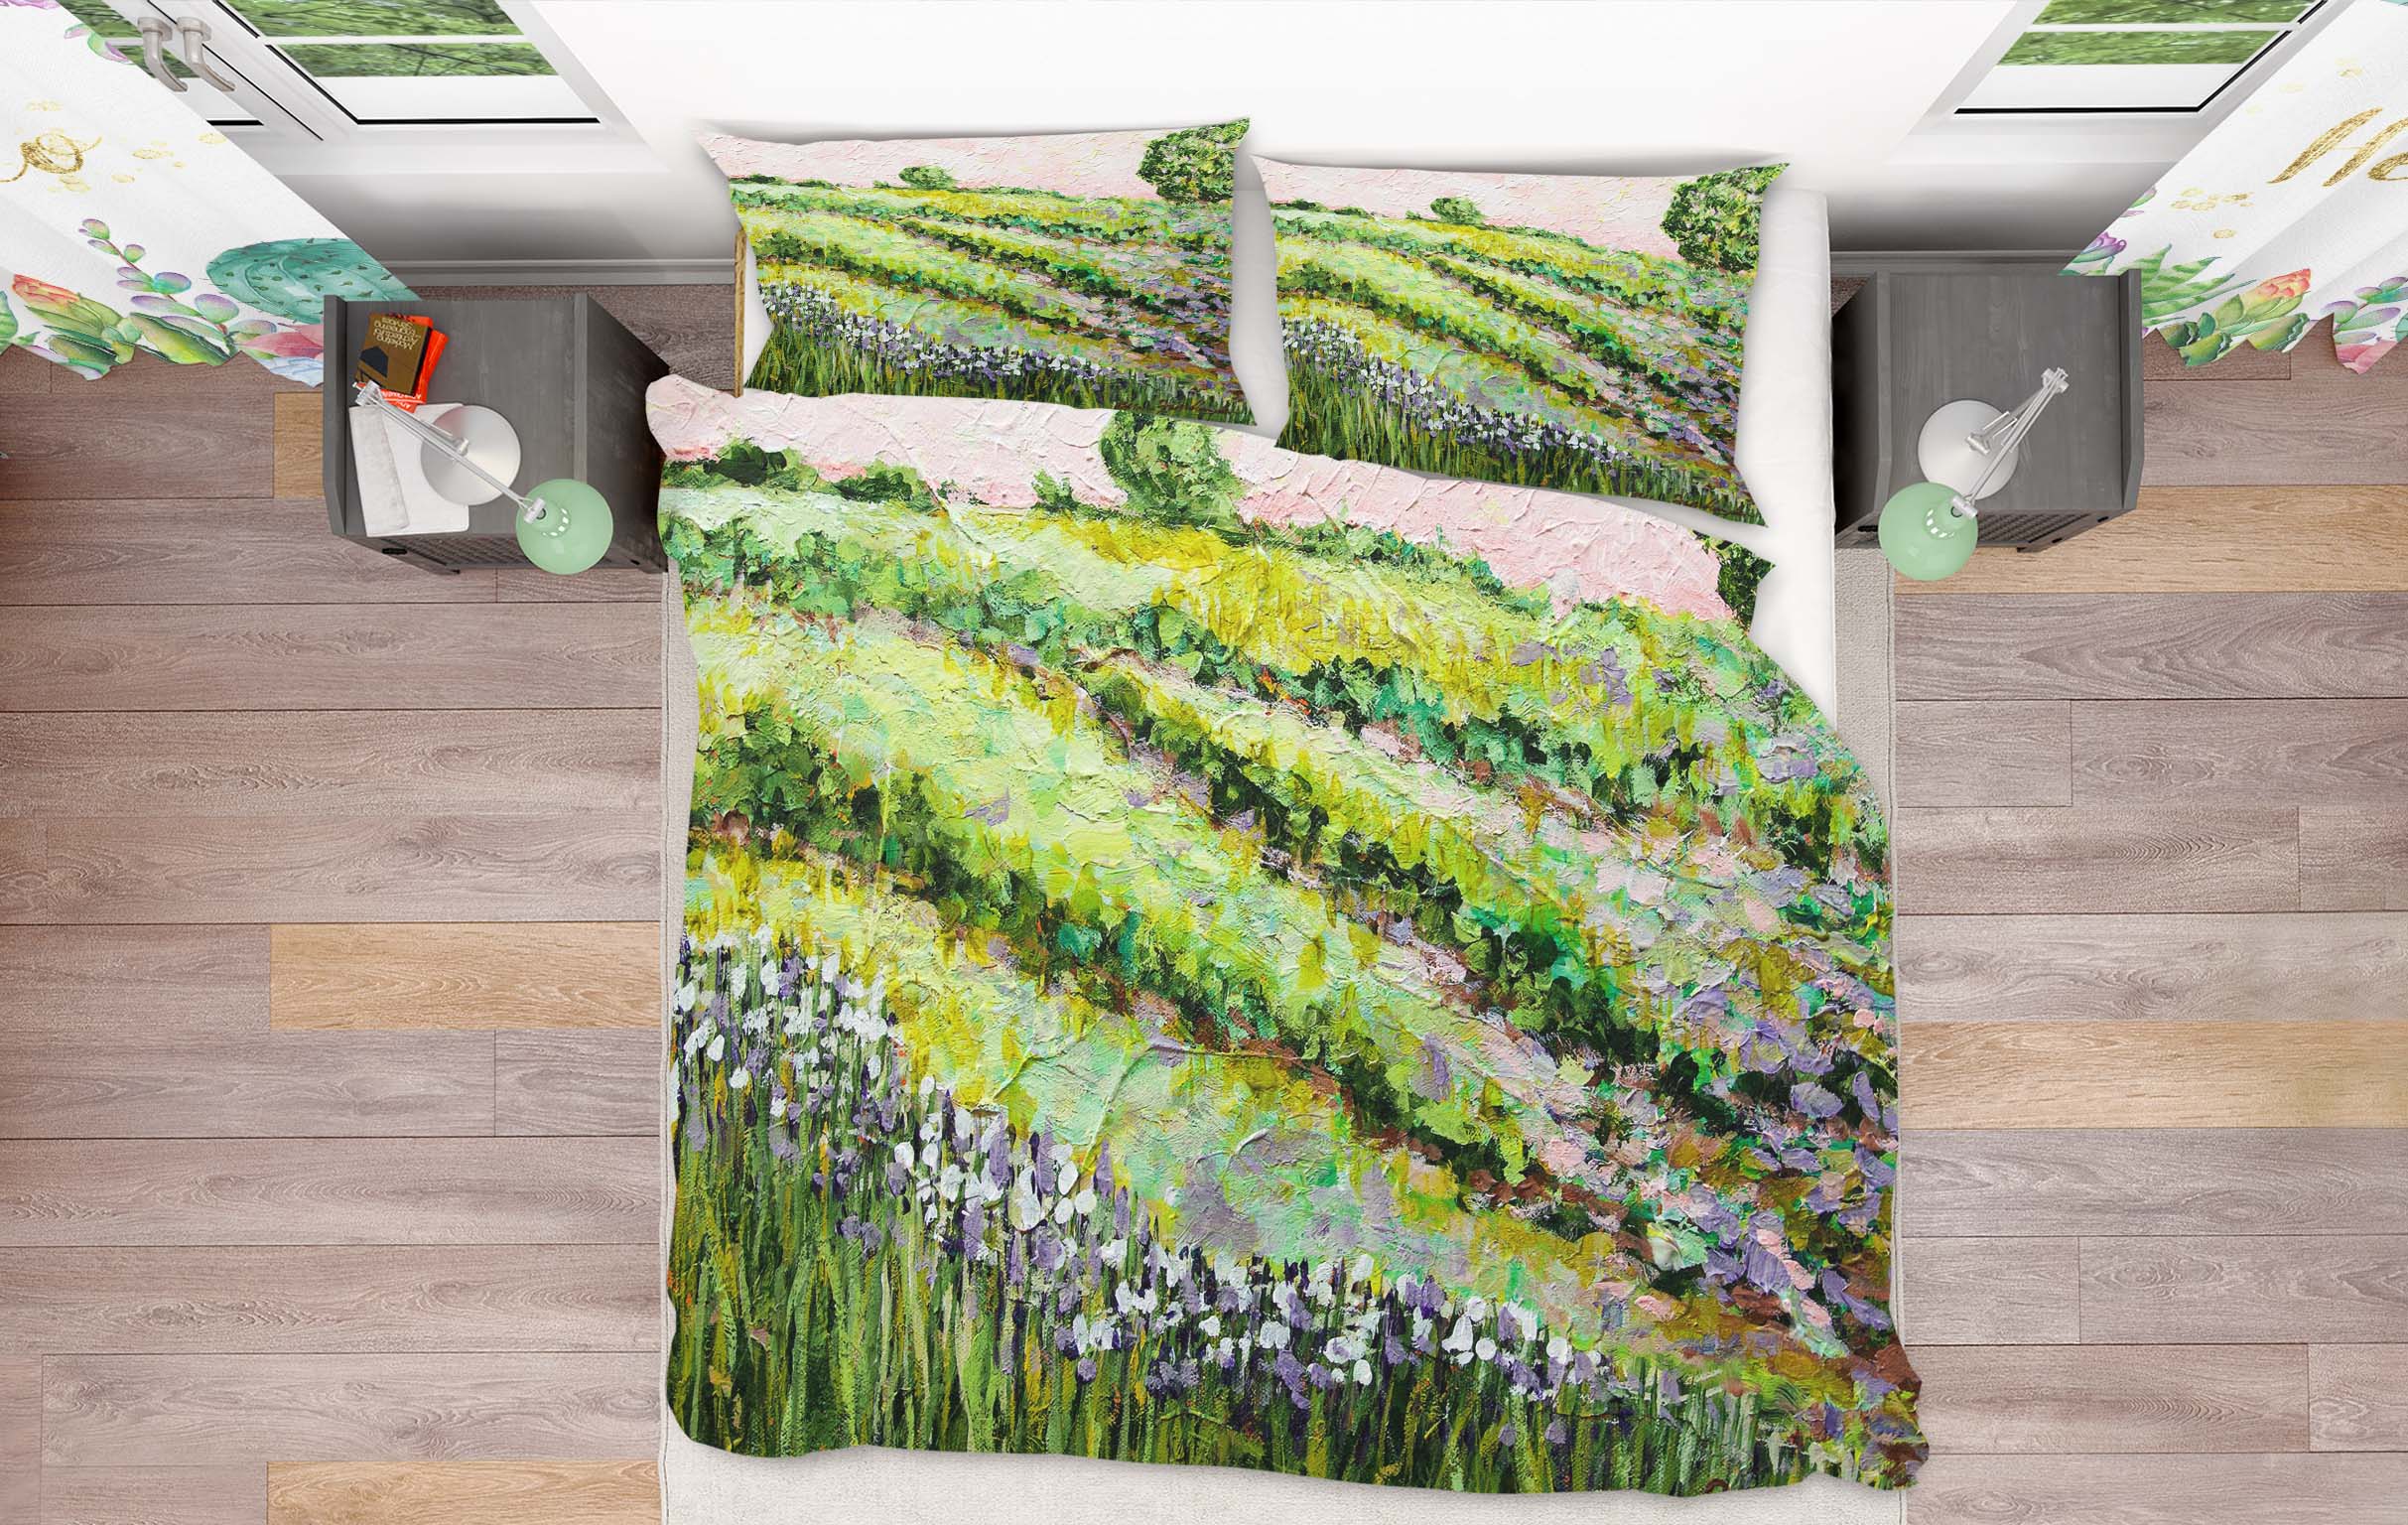 3D Morning Dew 1138 Allan P. Friedlander Bedding Bed Pillowcases Quilt